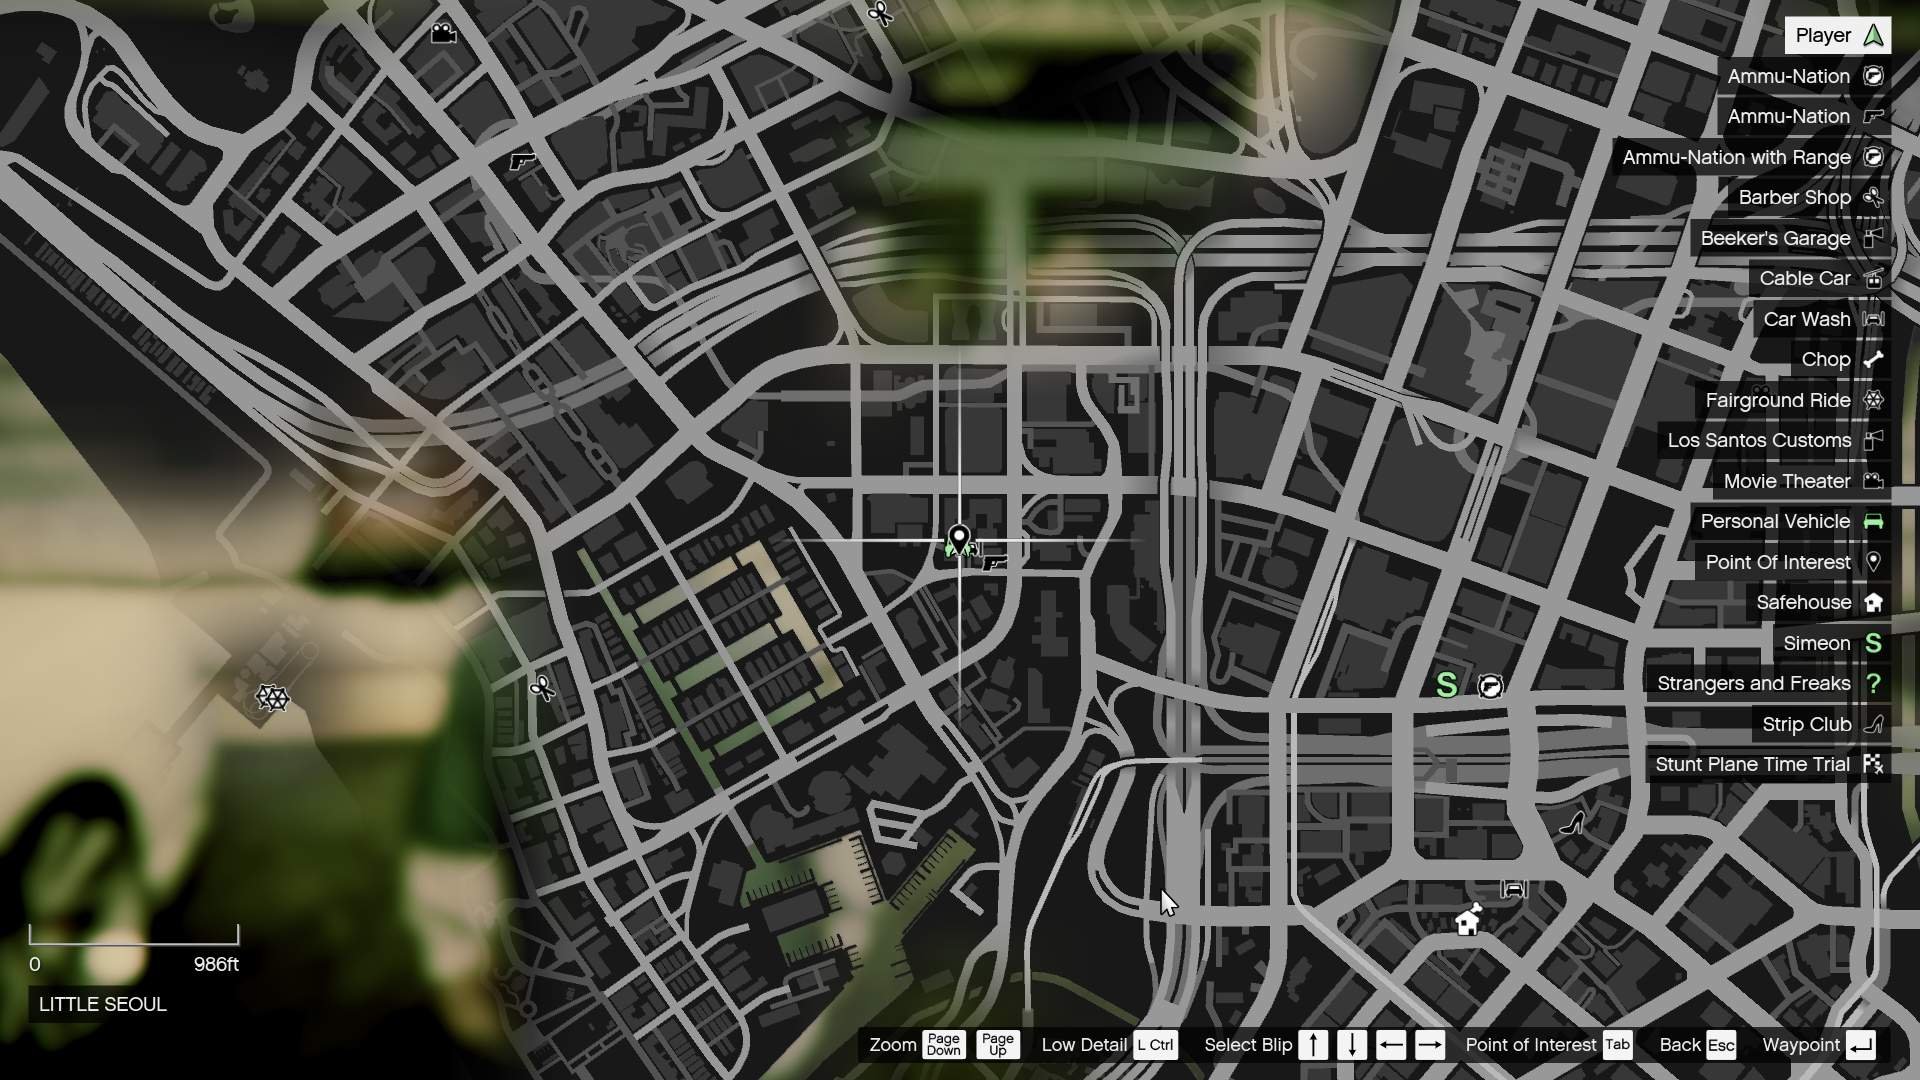 GTA 5 Convenience Store Map (8192x8192px) : r/GrandTheftAutoV